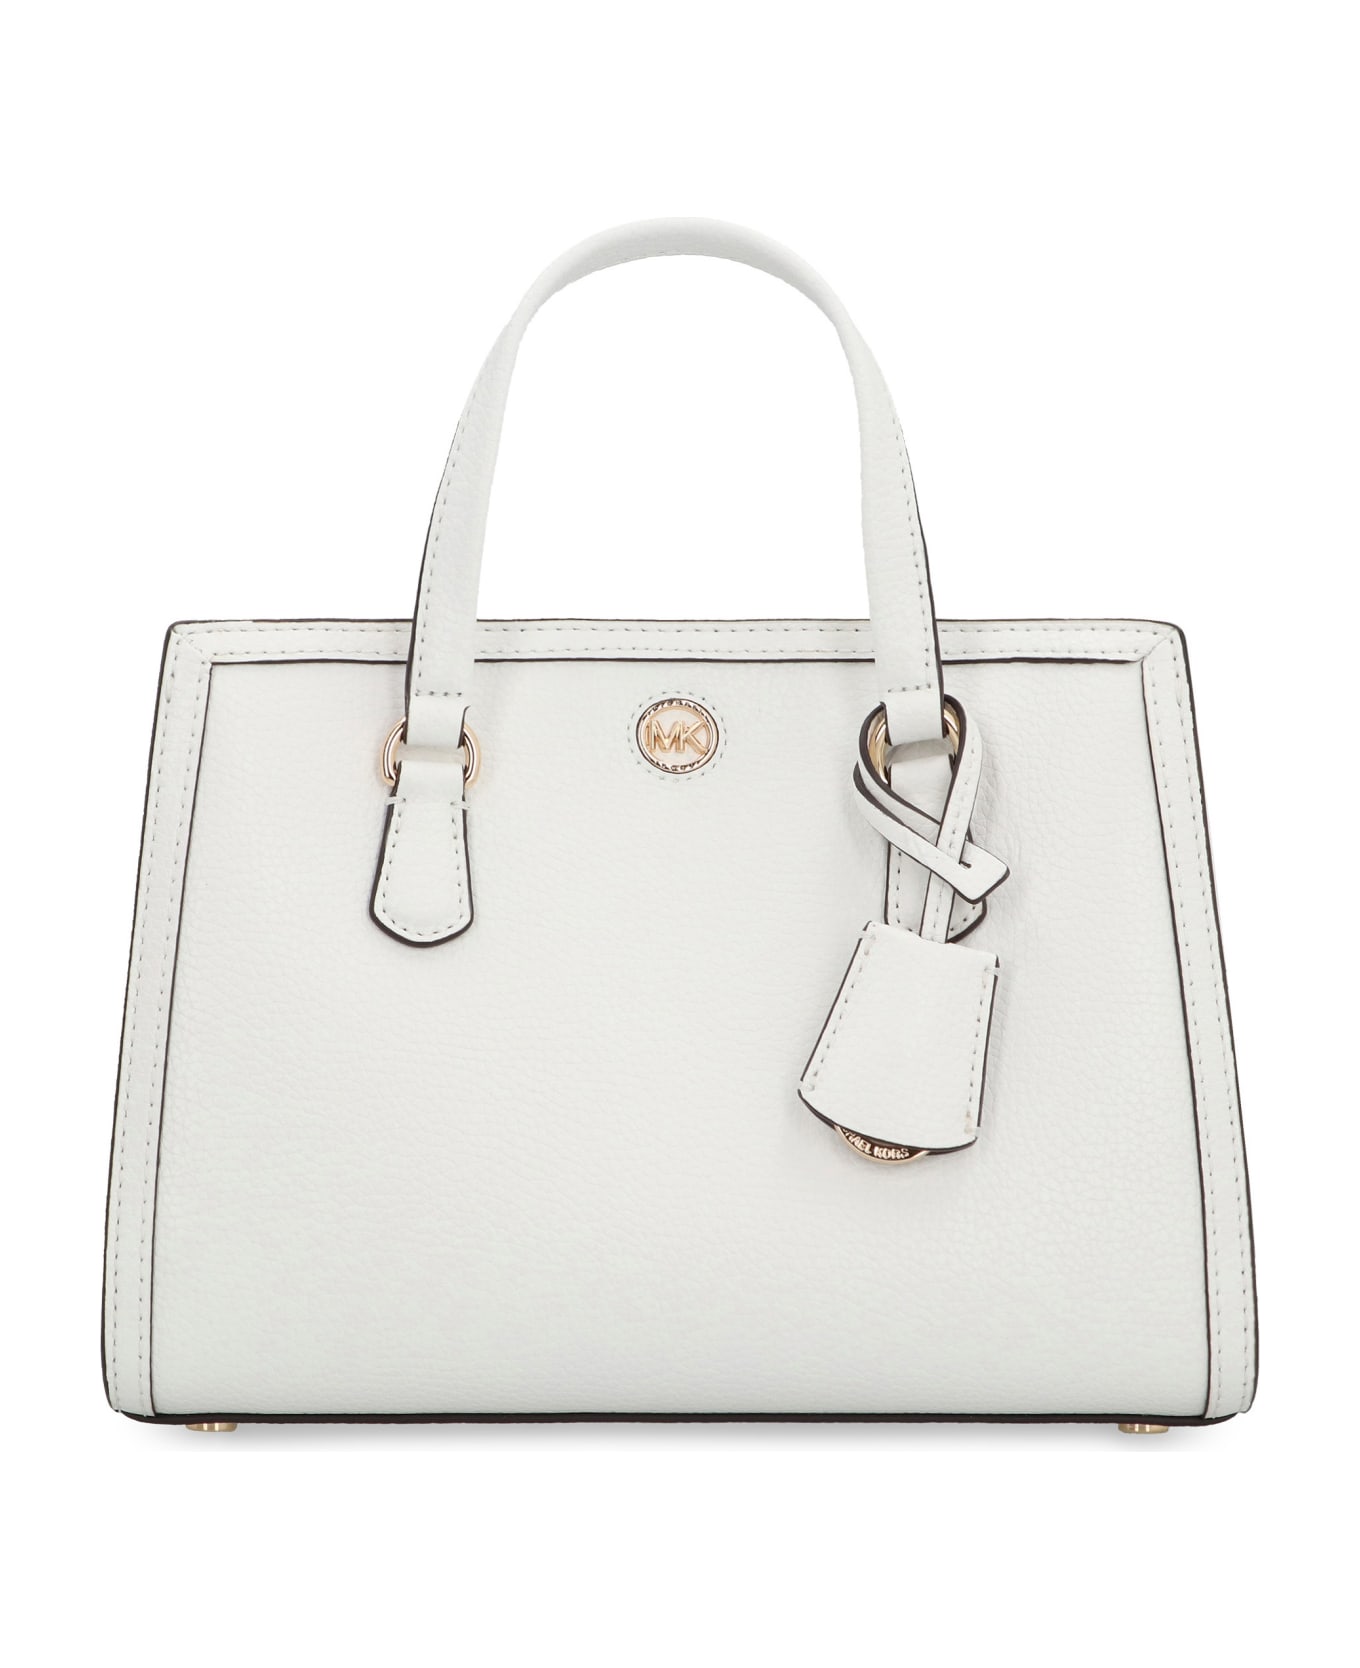 MICHAEL Michael Kors Chantal Leather Handbag - White